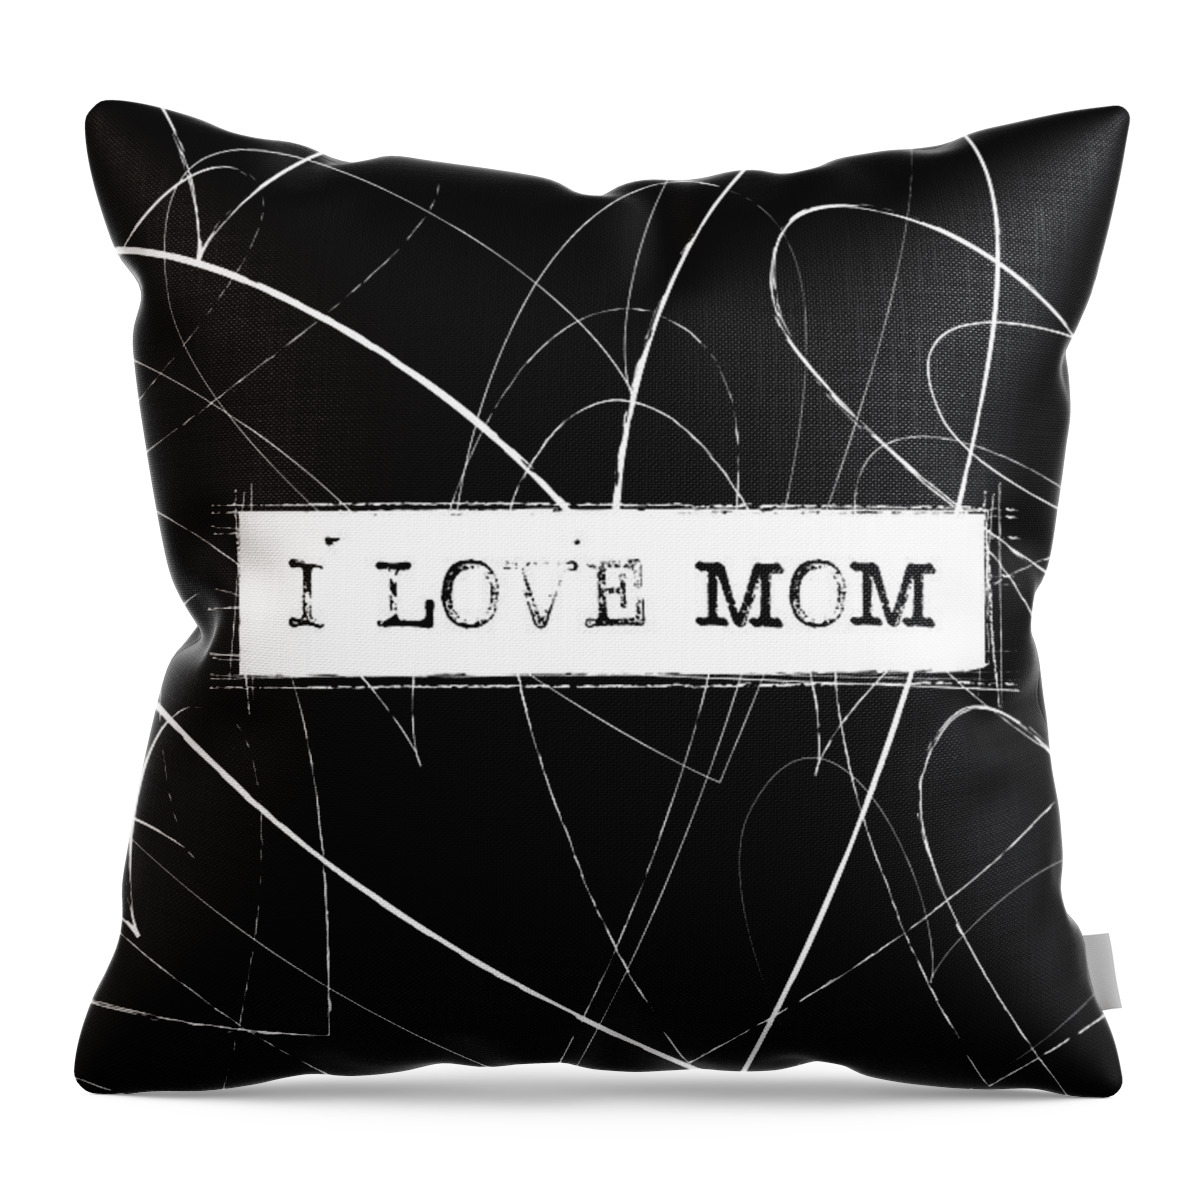 Love Throw Pillow featuring the digital art I love mom word art by Kathleen Wong